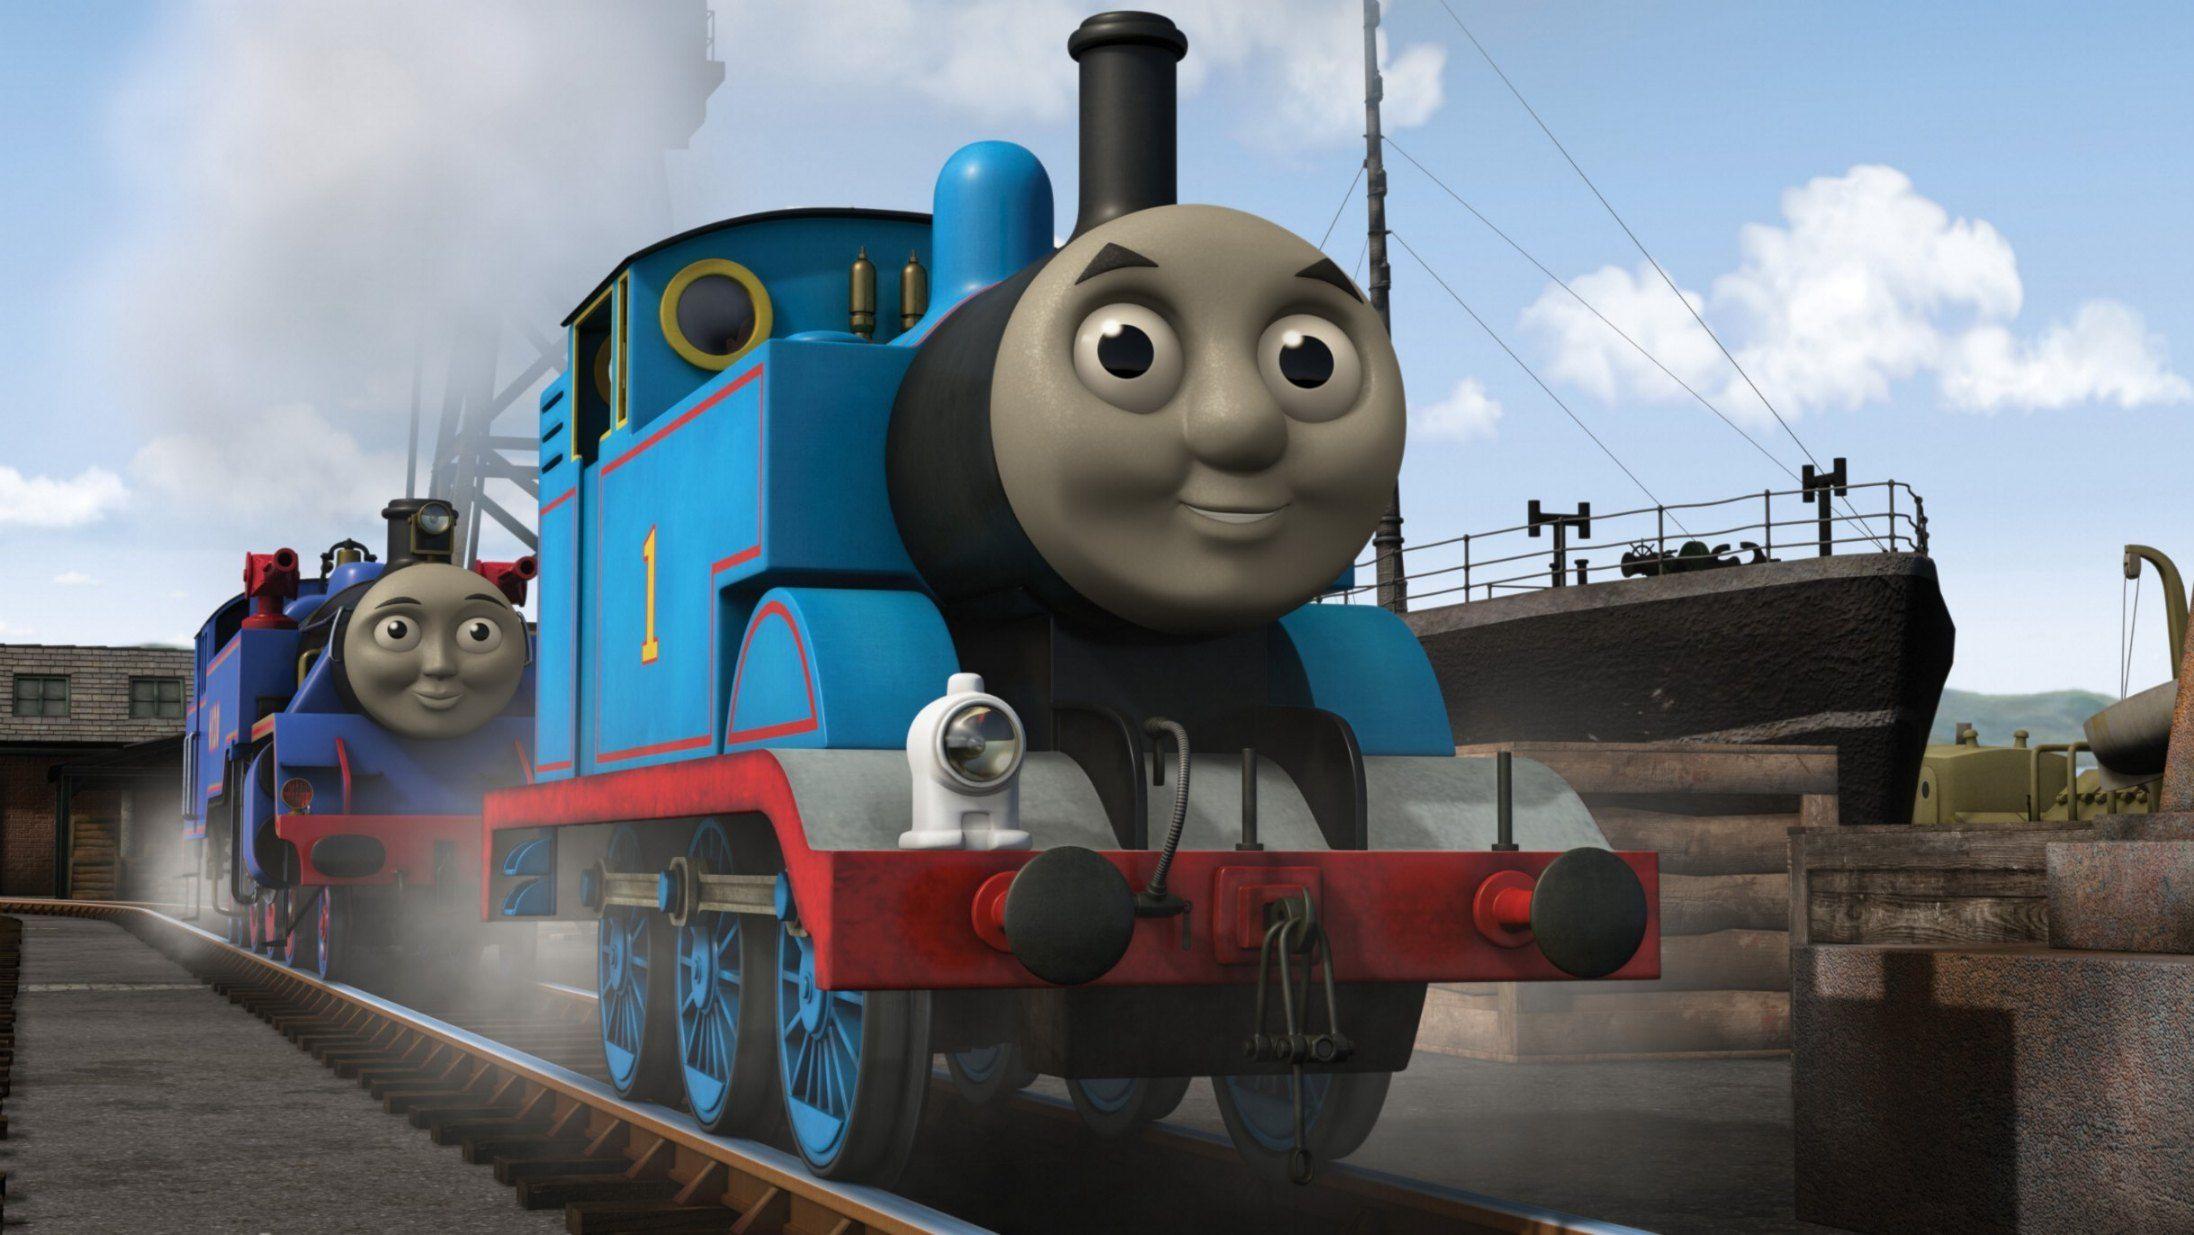 Thomas the Tank Engine returns to Vue.